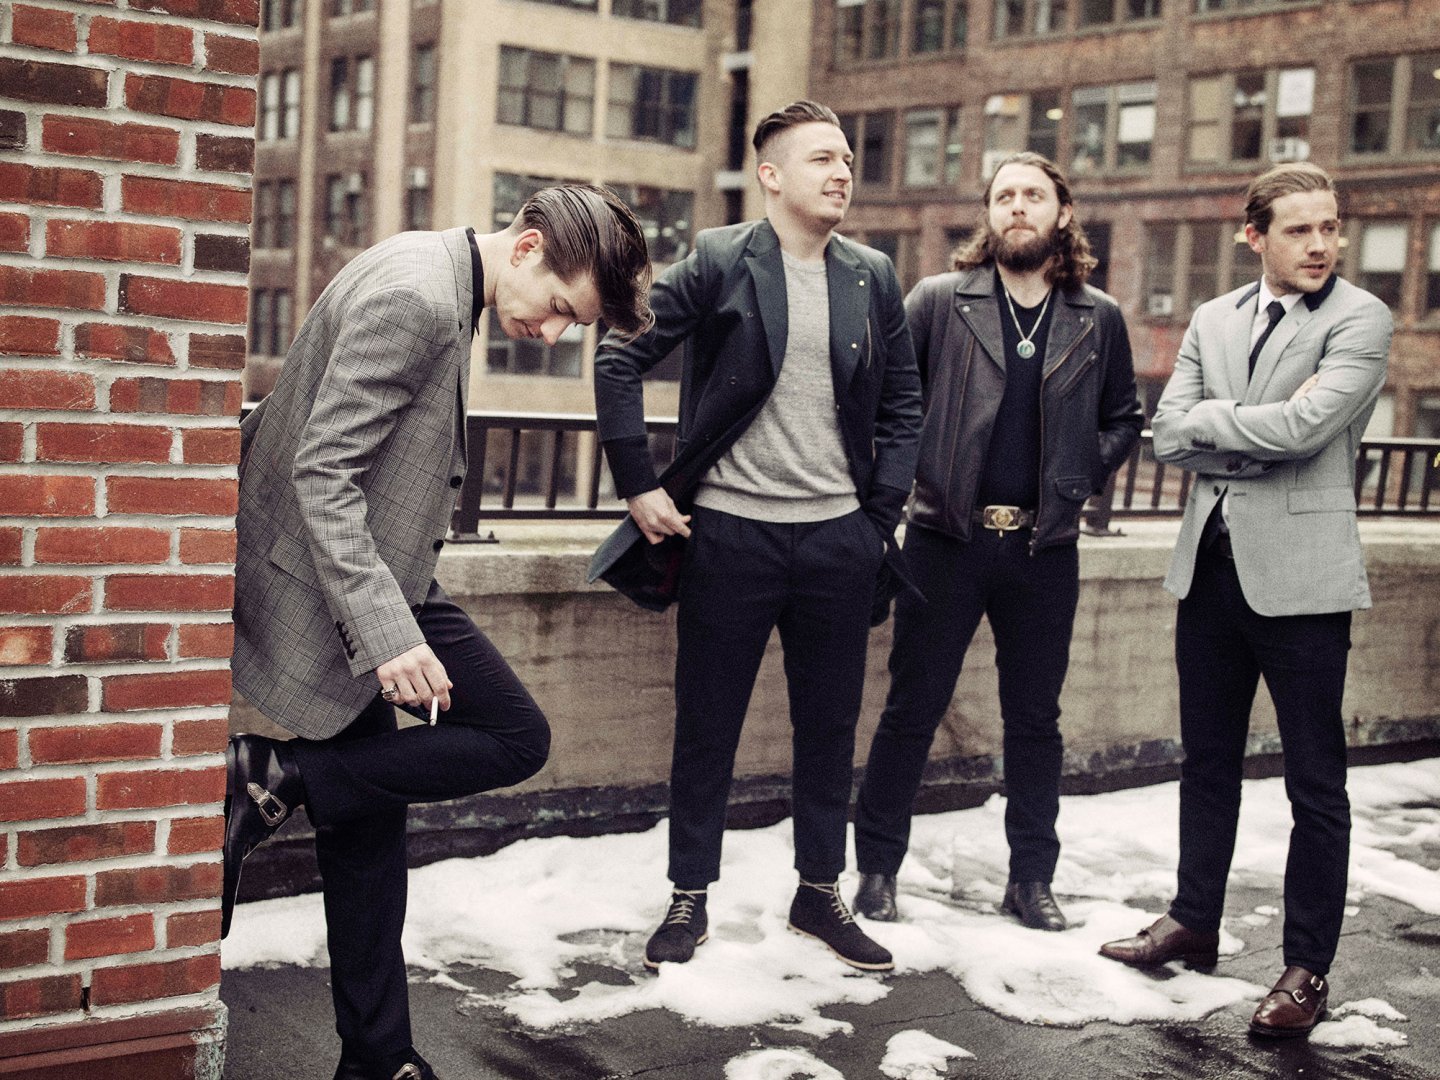 Arctic Monkeys interpreta “Badphone” por primera vez en vivo